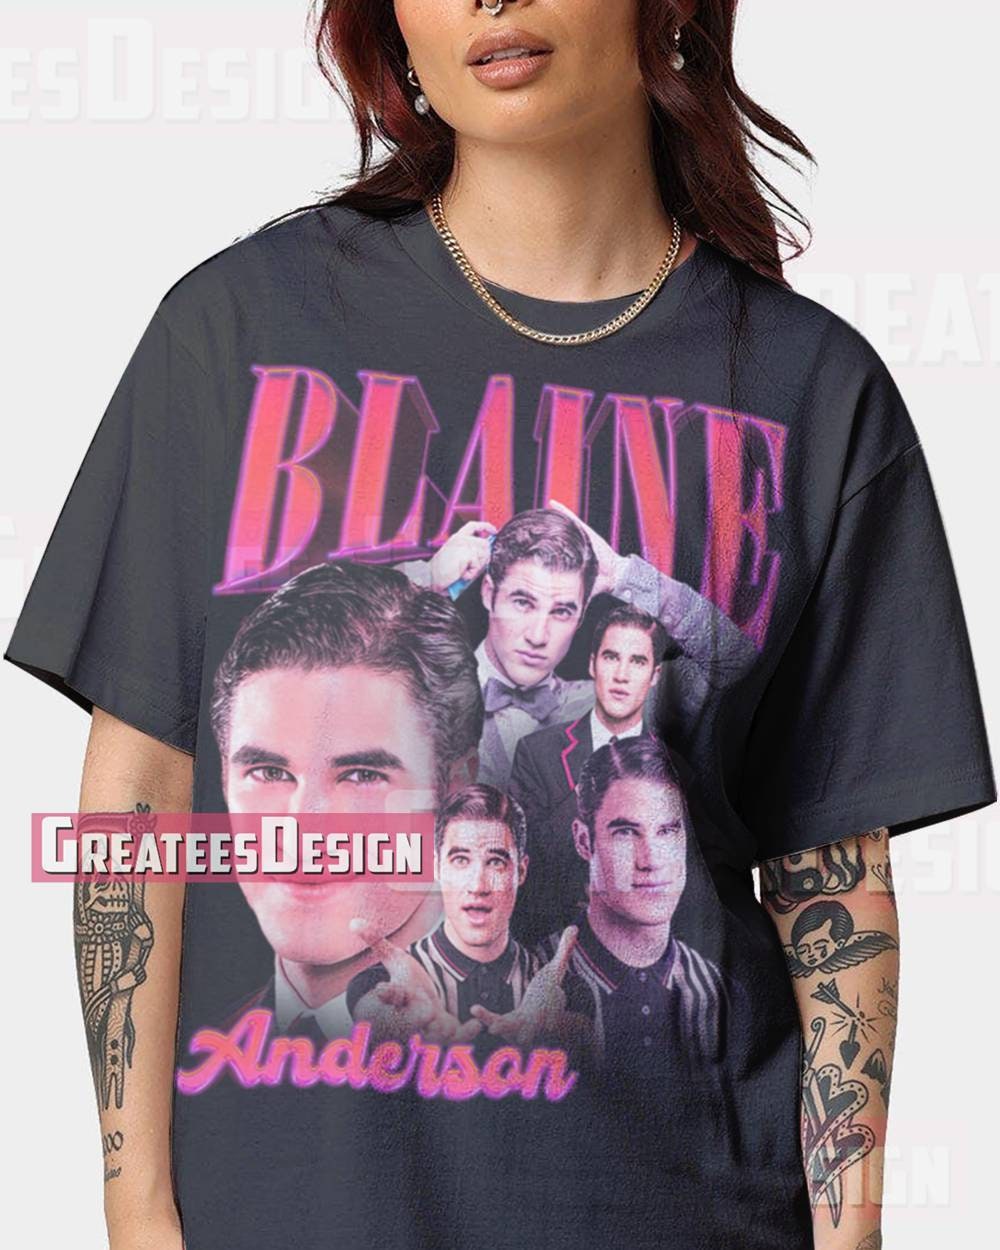 Limited Blaine Anderson Shirt Darren Criss Tshirt